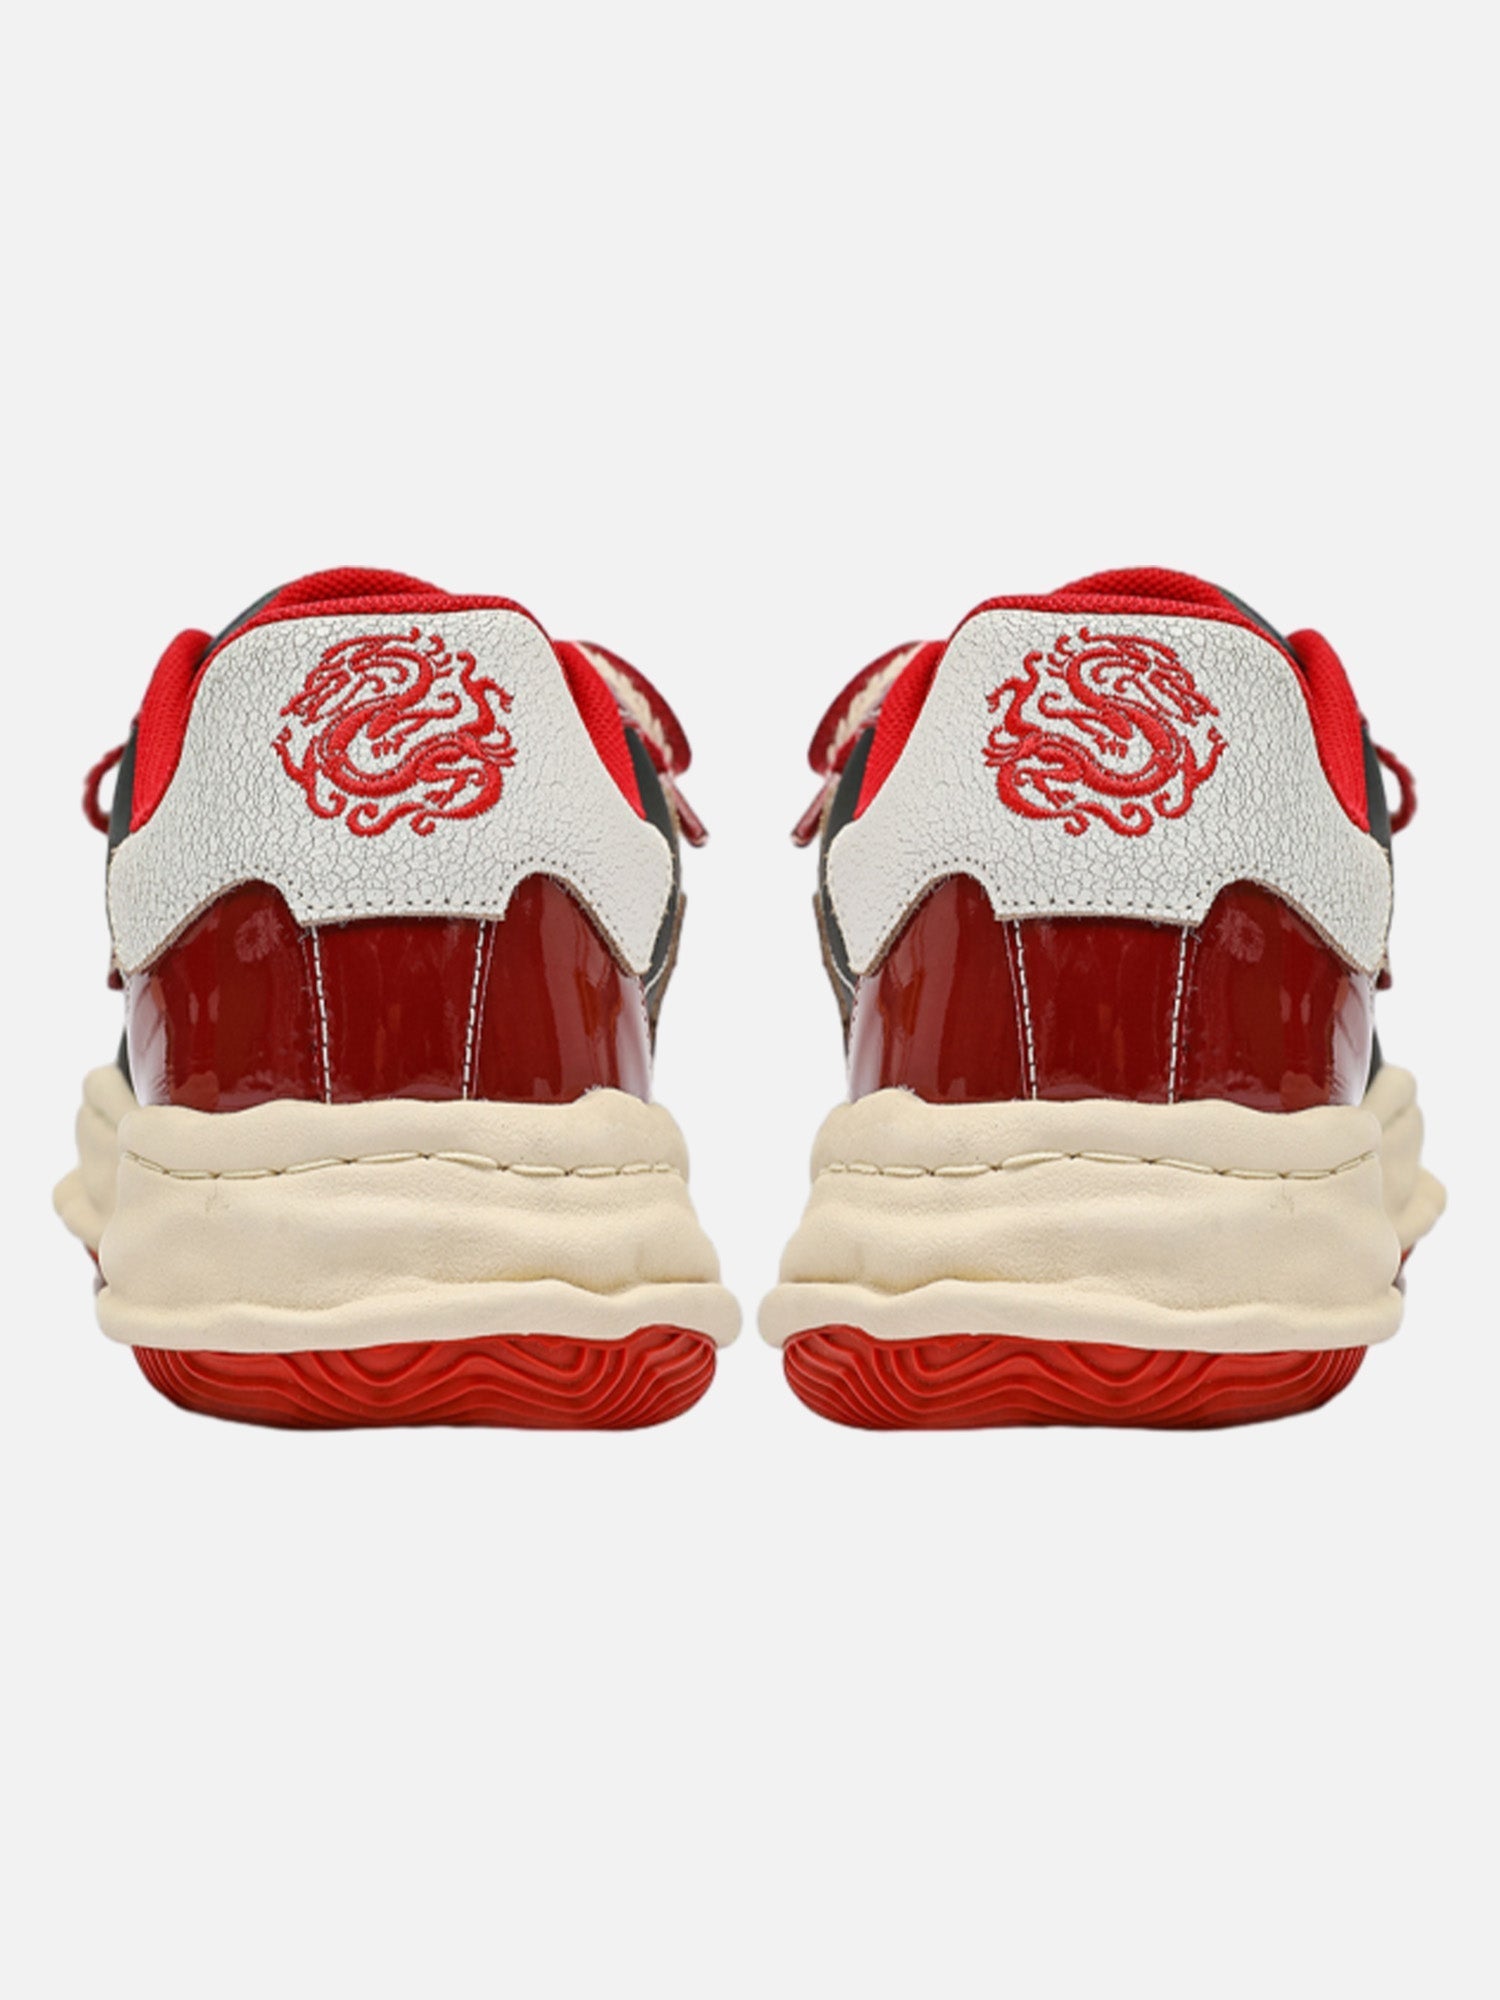 Dragon Red Shell Toe Dissolving Shoes Retro Sneakers